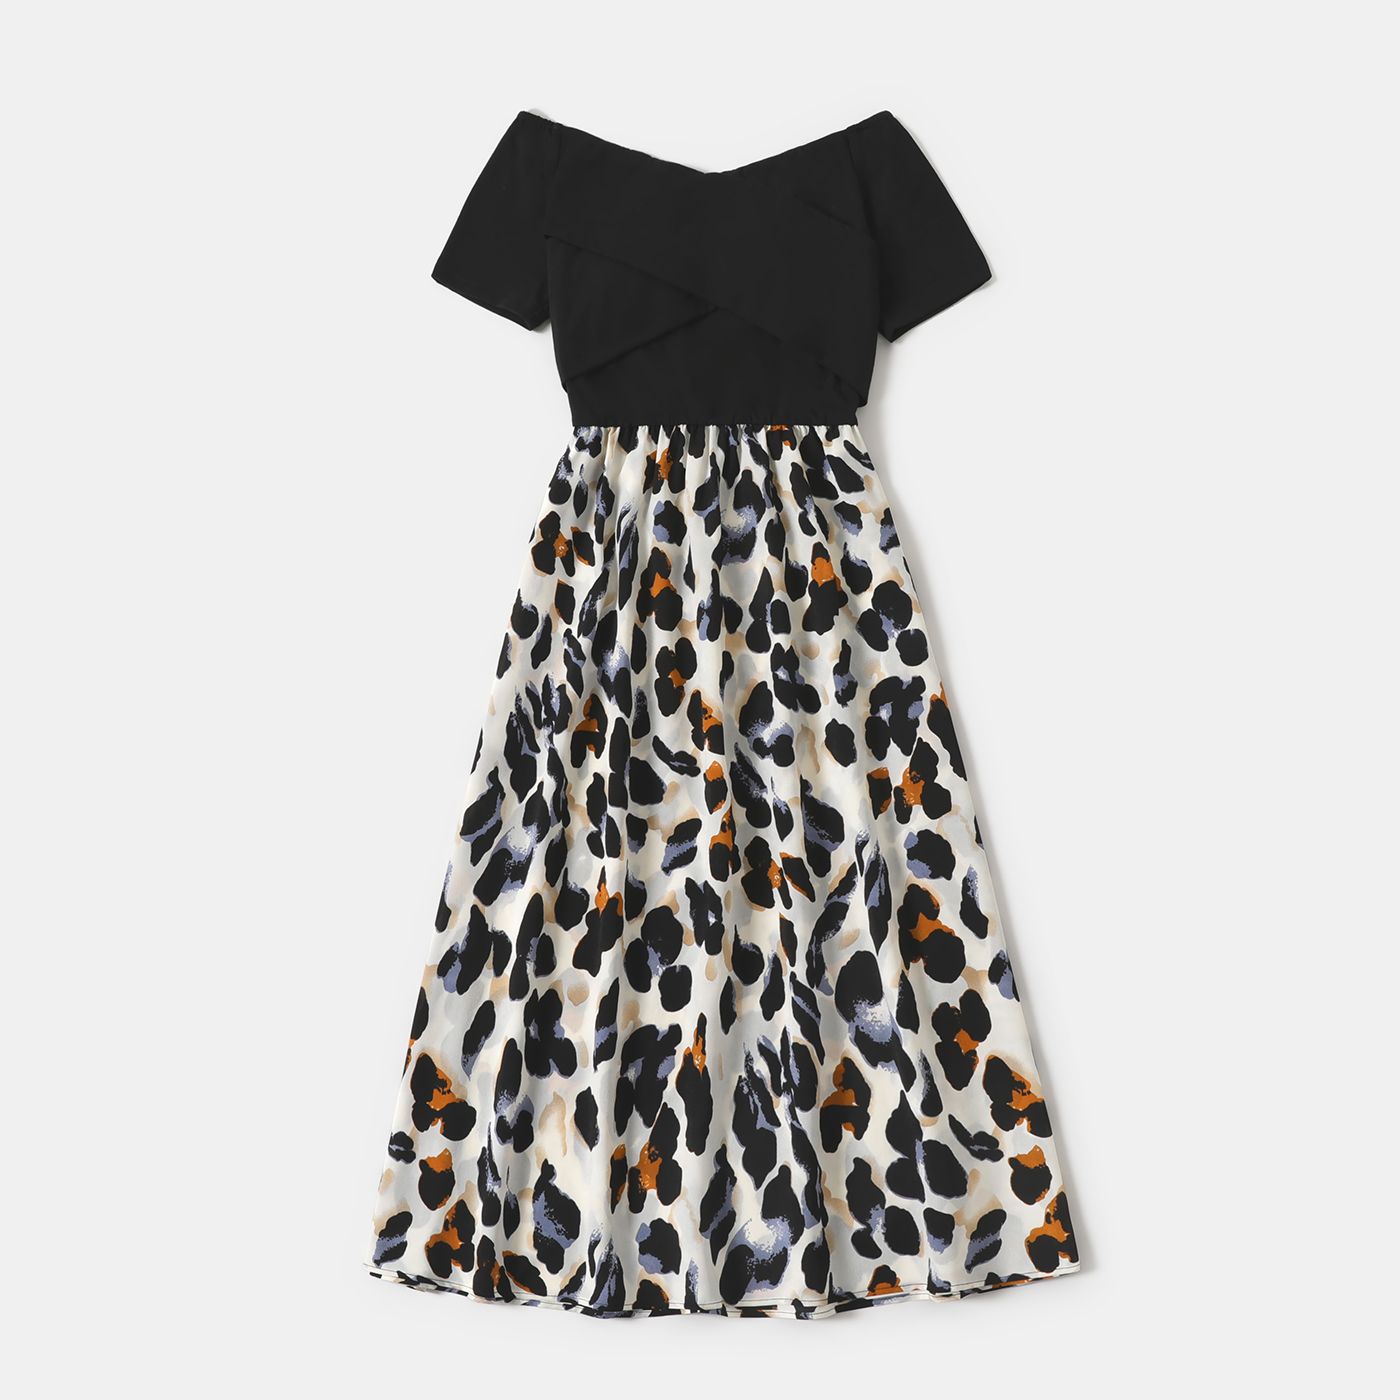 Family Matching Black Splice Leopard Off Shoulder Crisscross Front Short-sleeve Dresses And T-shirts Sets